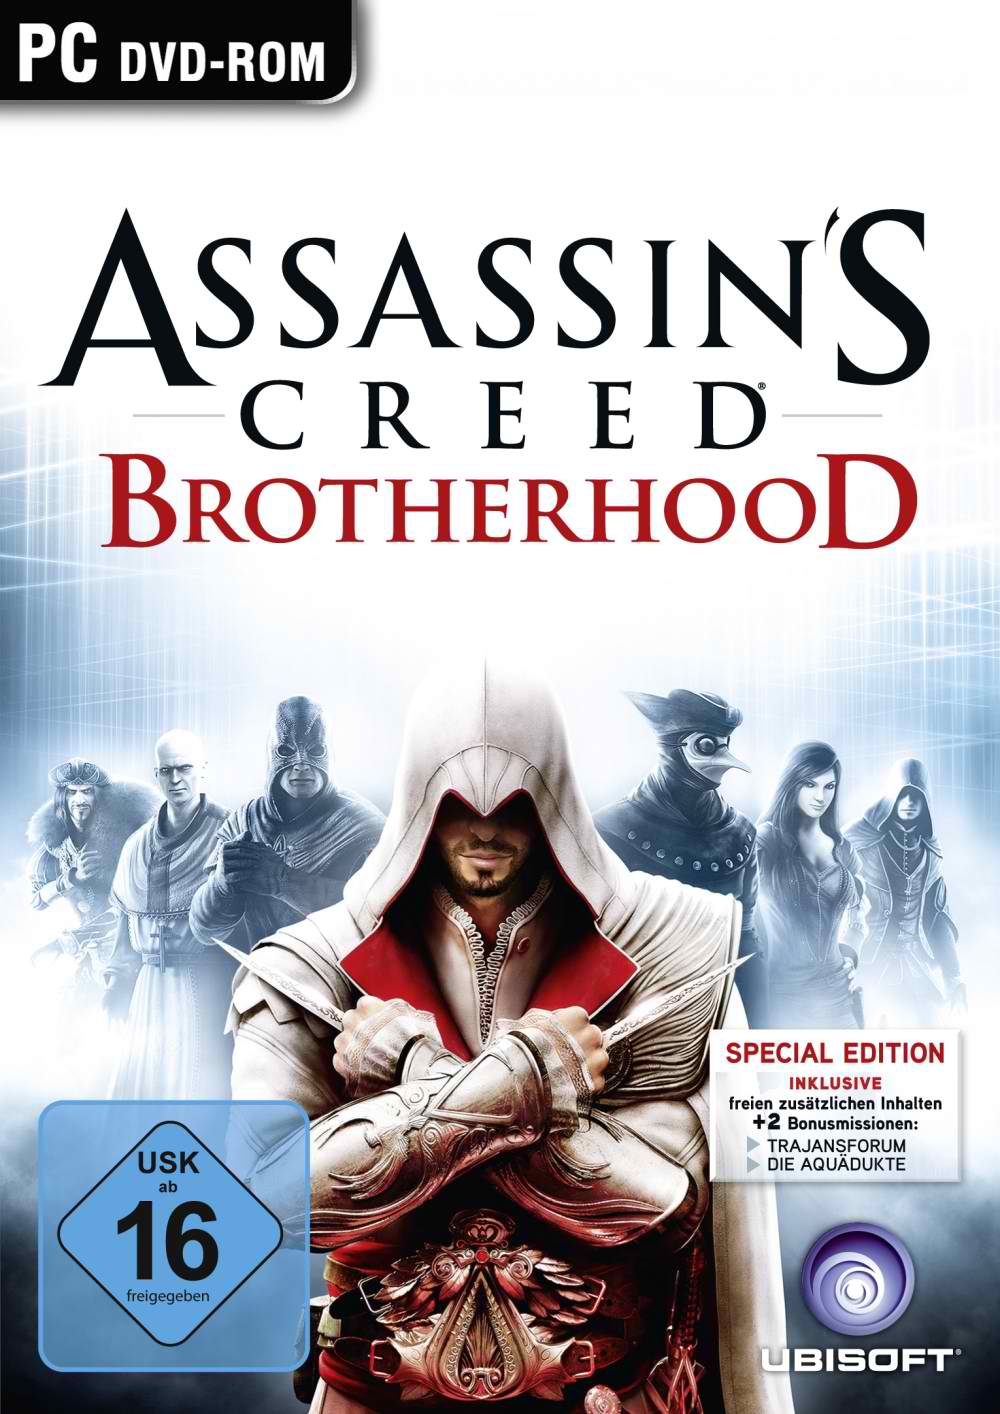 Assassins creed brotherhood save steam фото 40